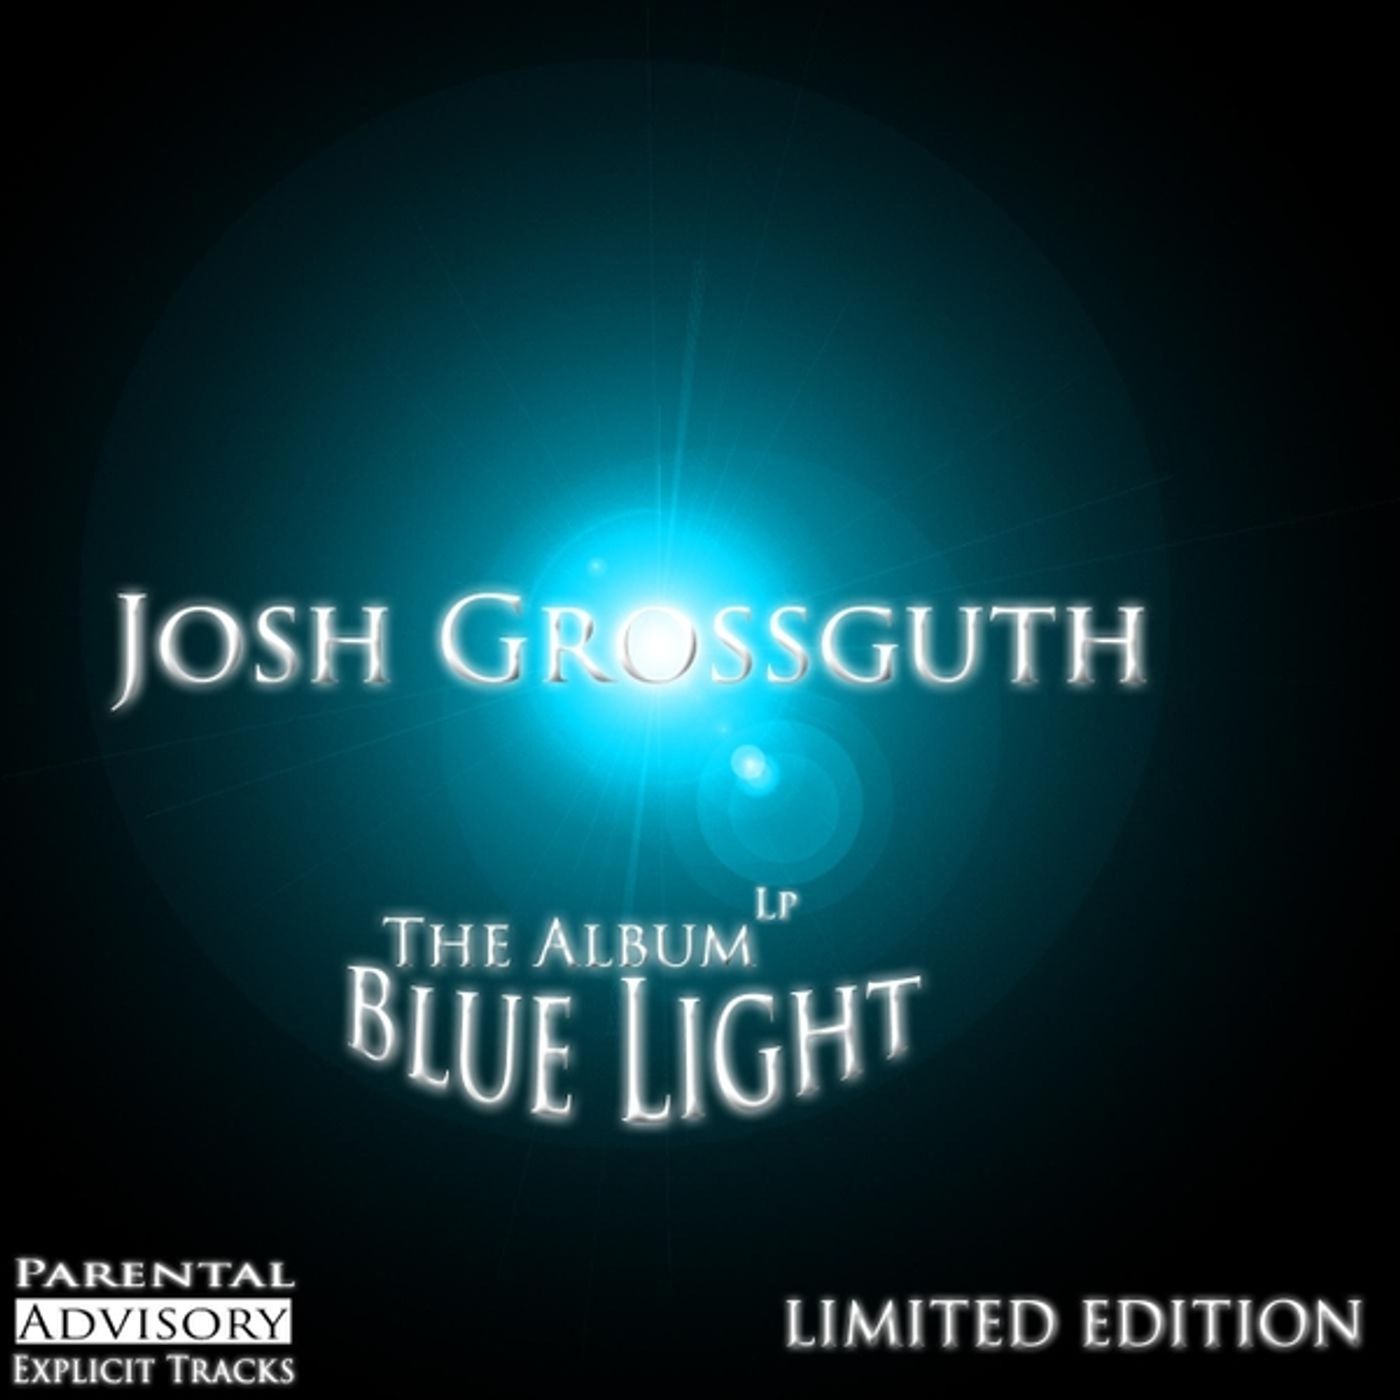 The Blue Light Album